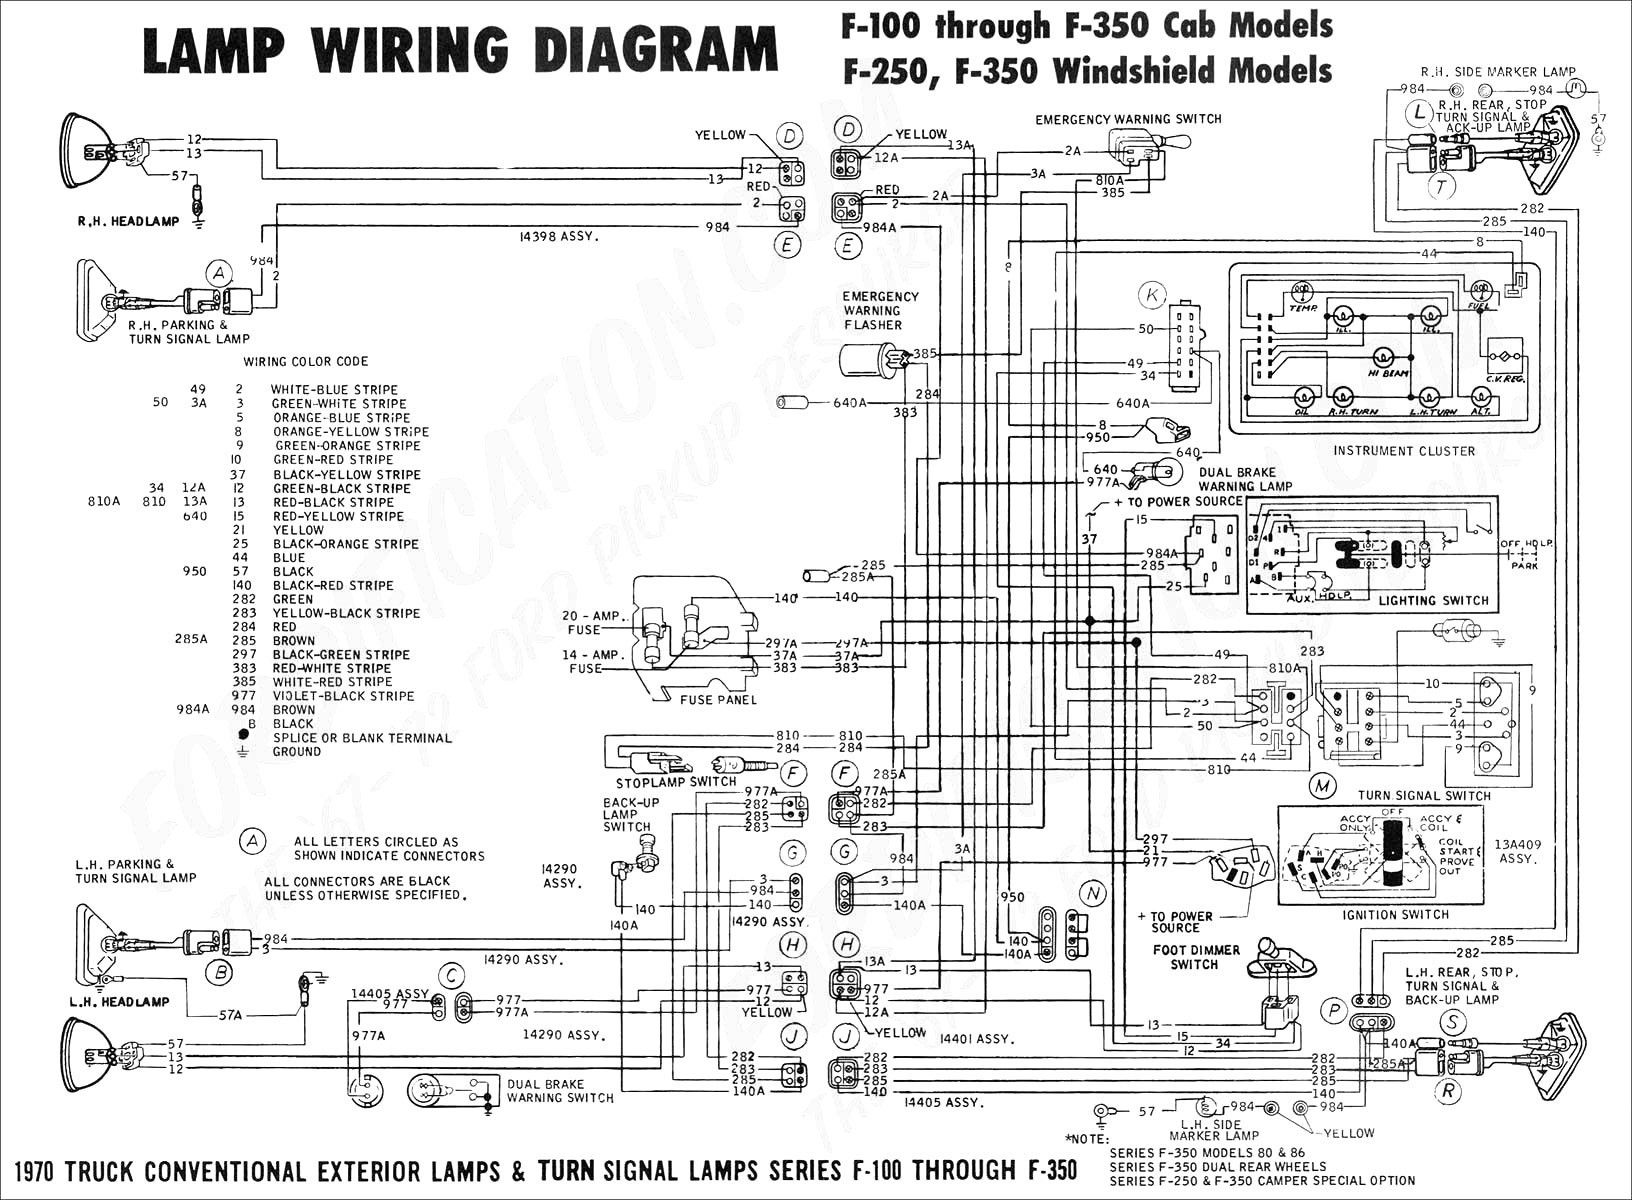 abs wiring diagram 2008 ford fusion plete wiring diagrams u2022 rh oldorchardfarm co Grote Turn Signal Wiring Diagram Basic Turn Signal Wiring Diagram